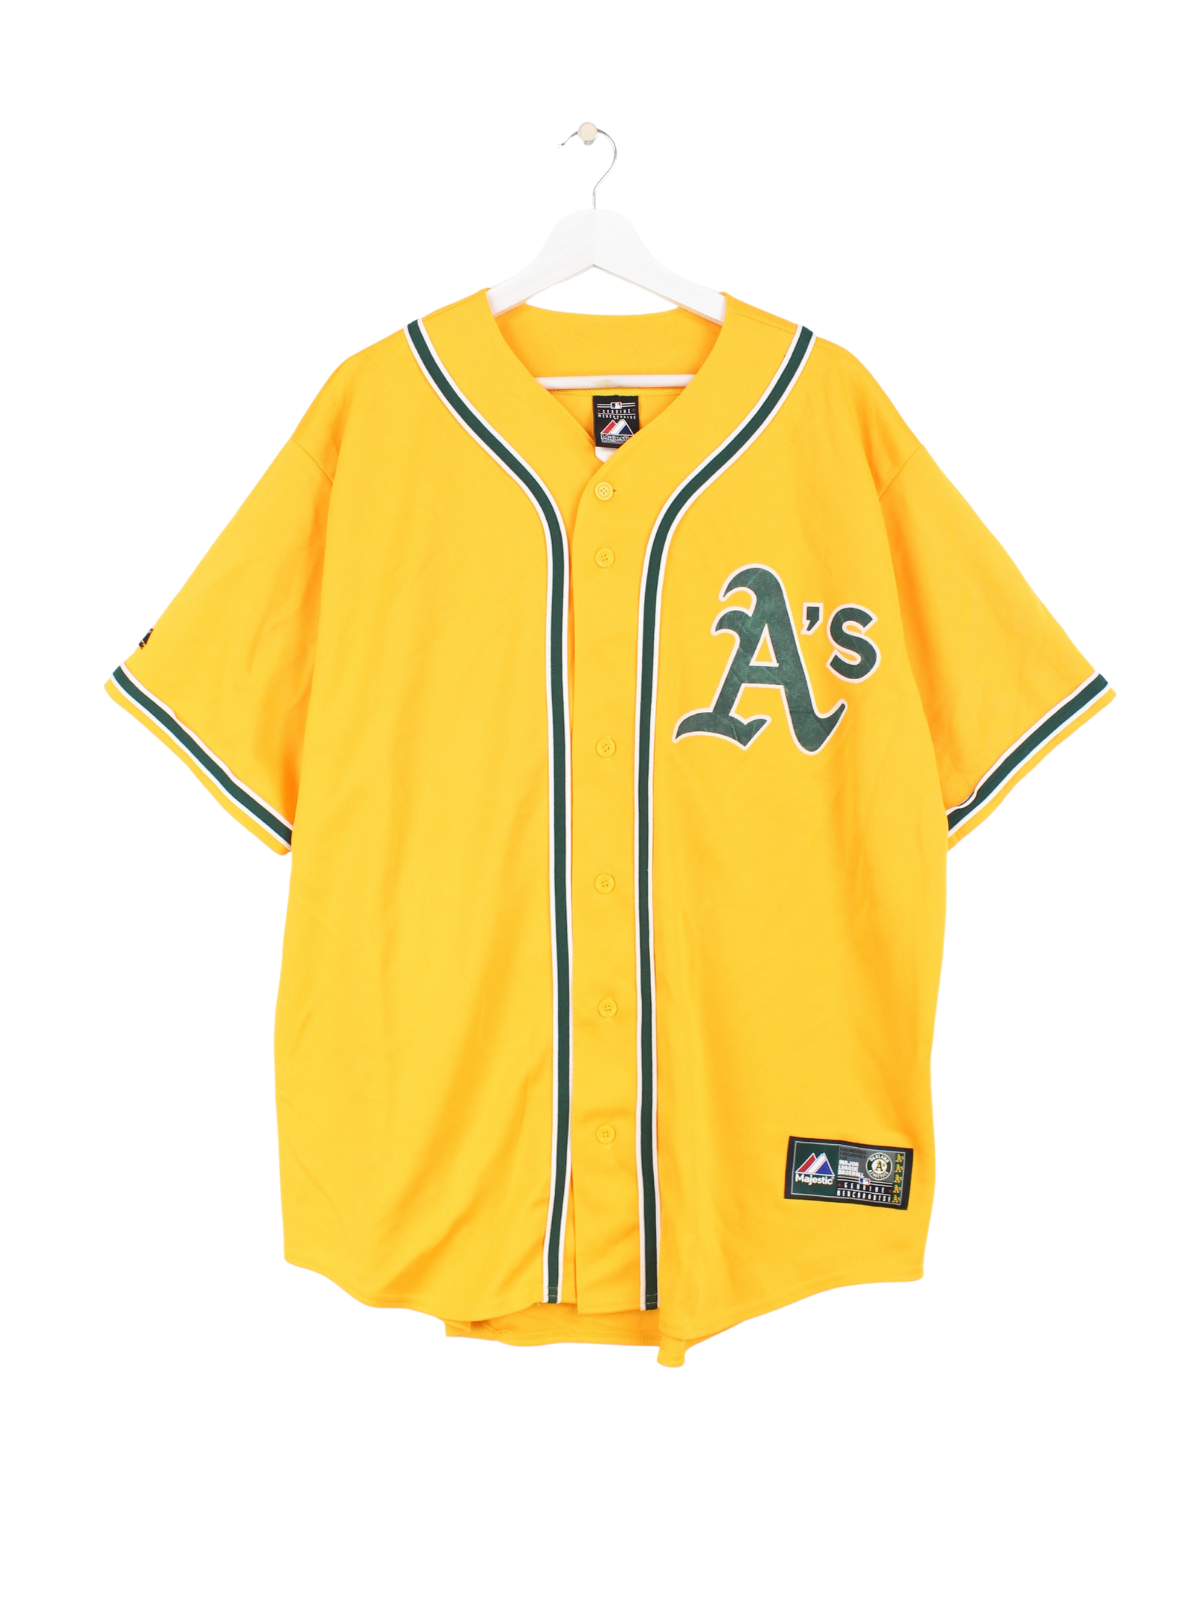 MLB Oakland Athletics Jersey Yellow XL